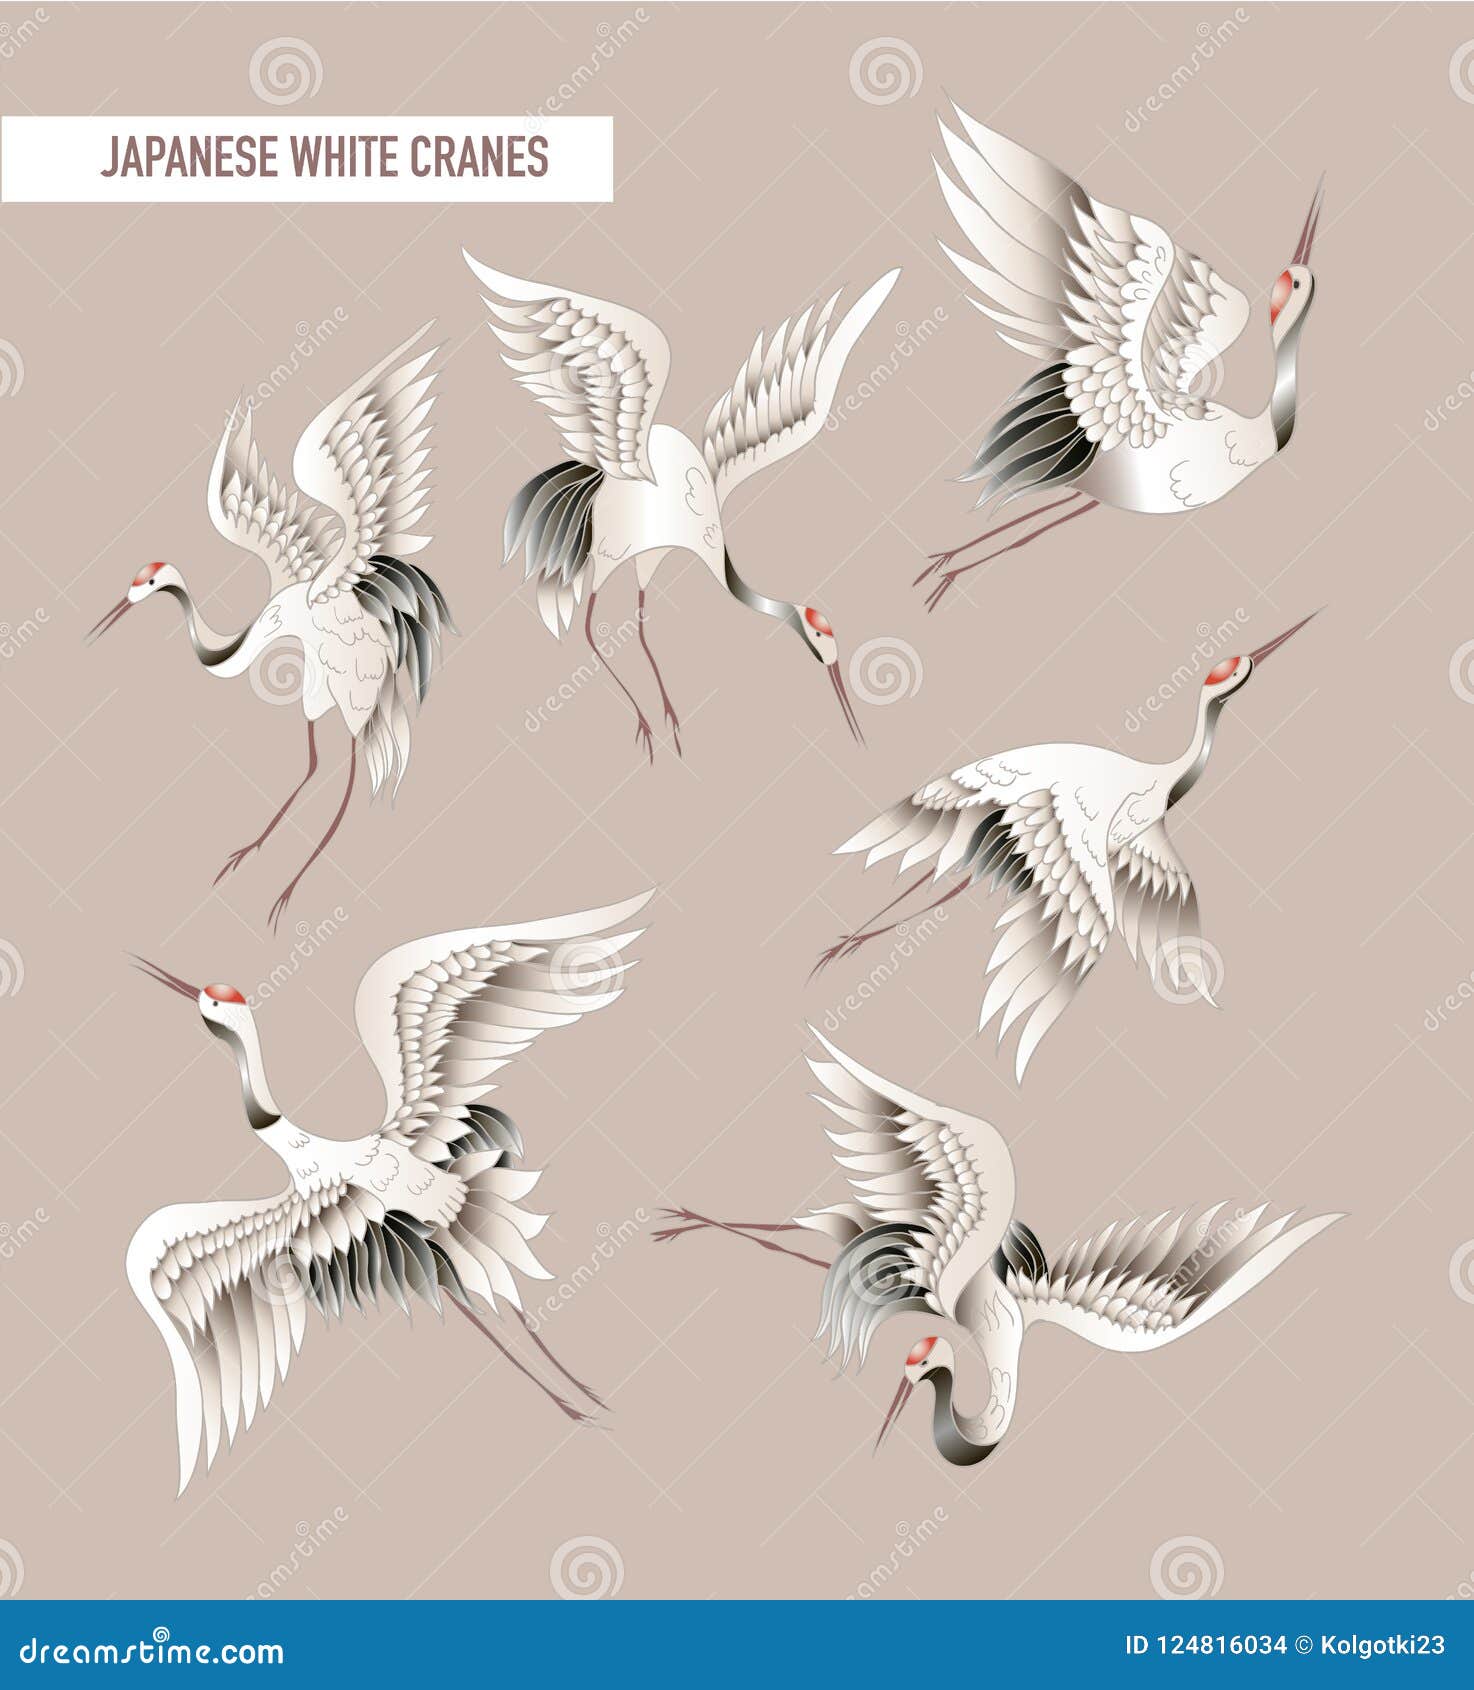 japanese white crane in batik style.  .